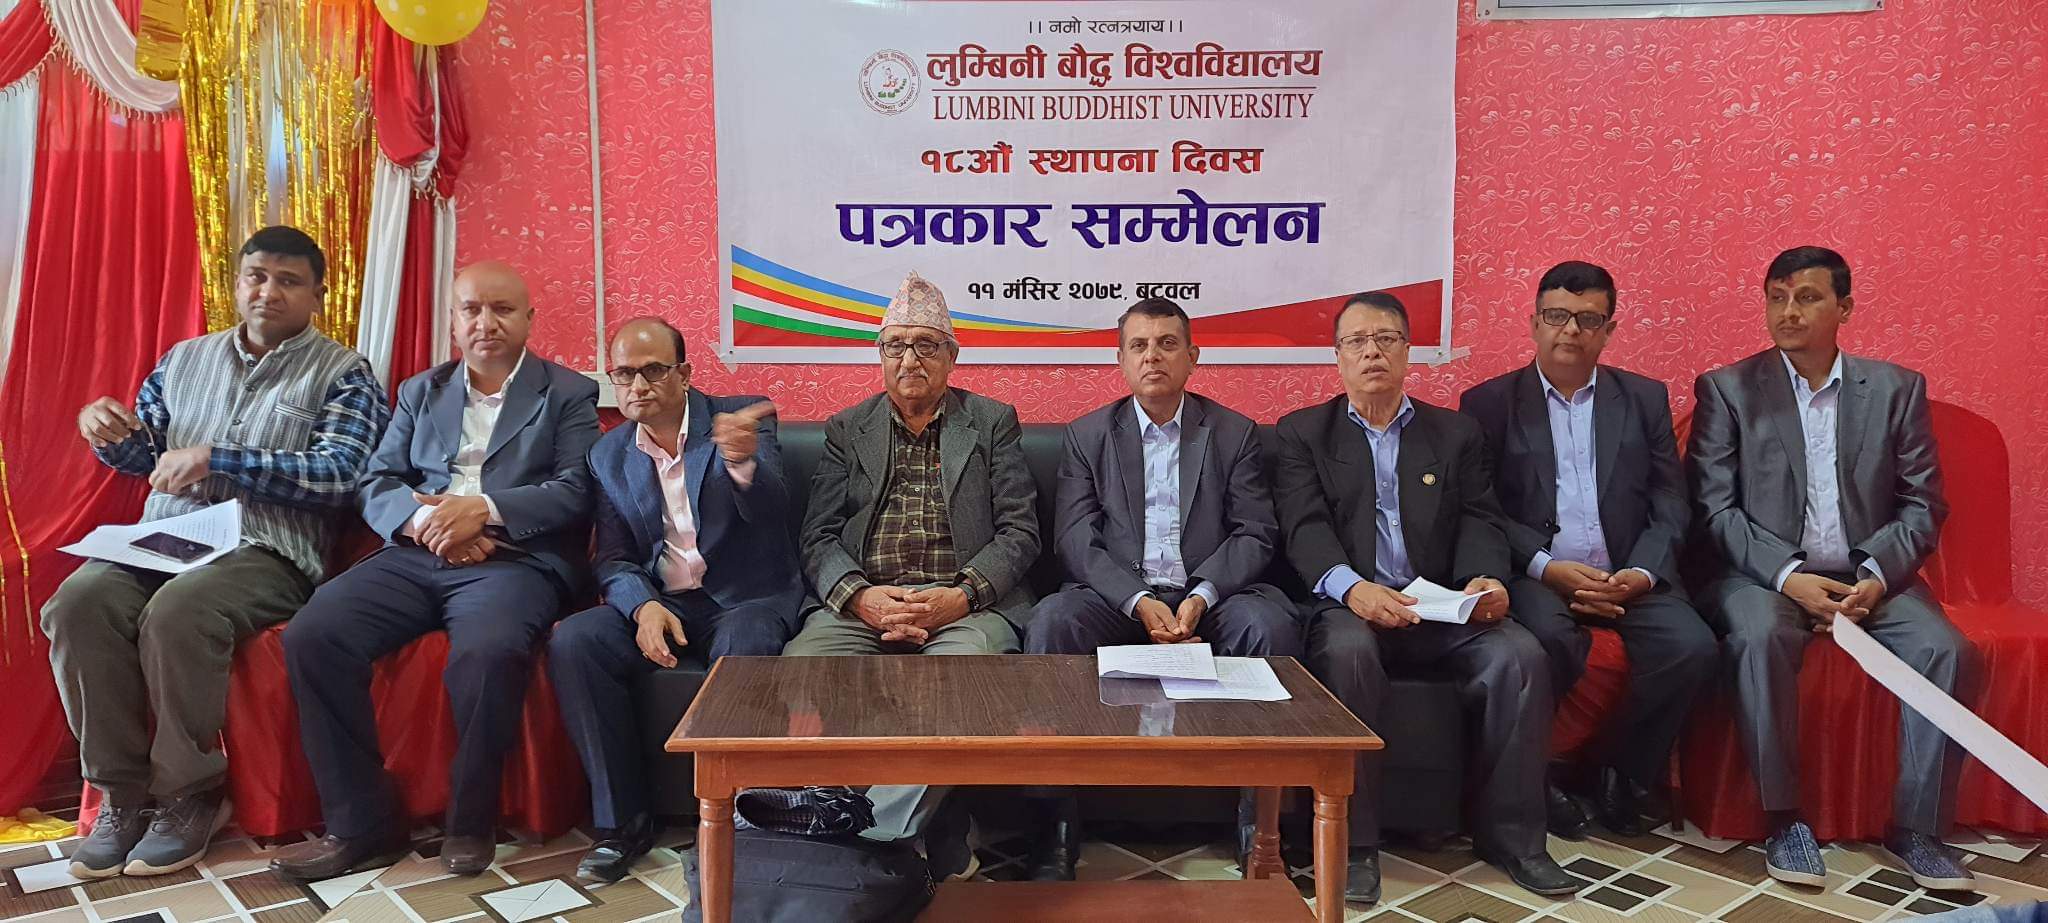 लुम्बिनी बौद्ध विश्वविद्यालयले १८ औं स्थापना दिवस सप्ताहव्यापी मनाउँदै